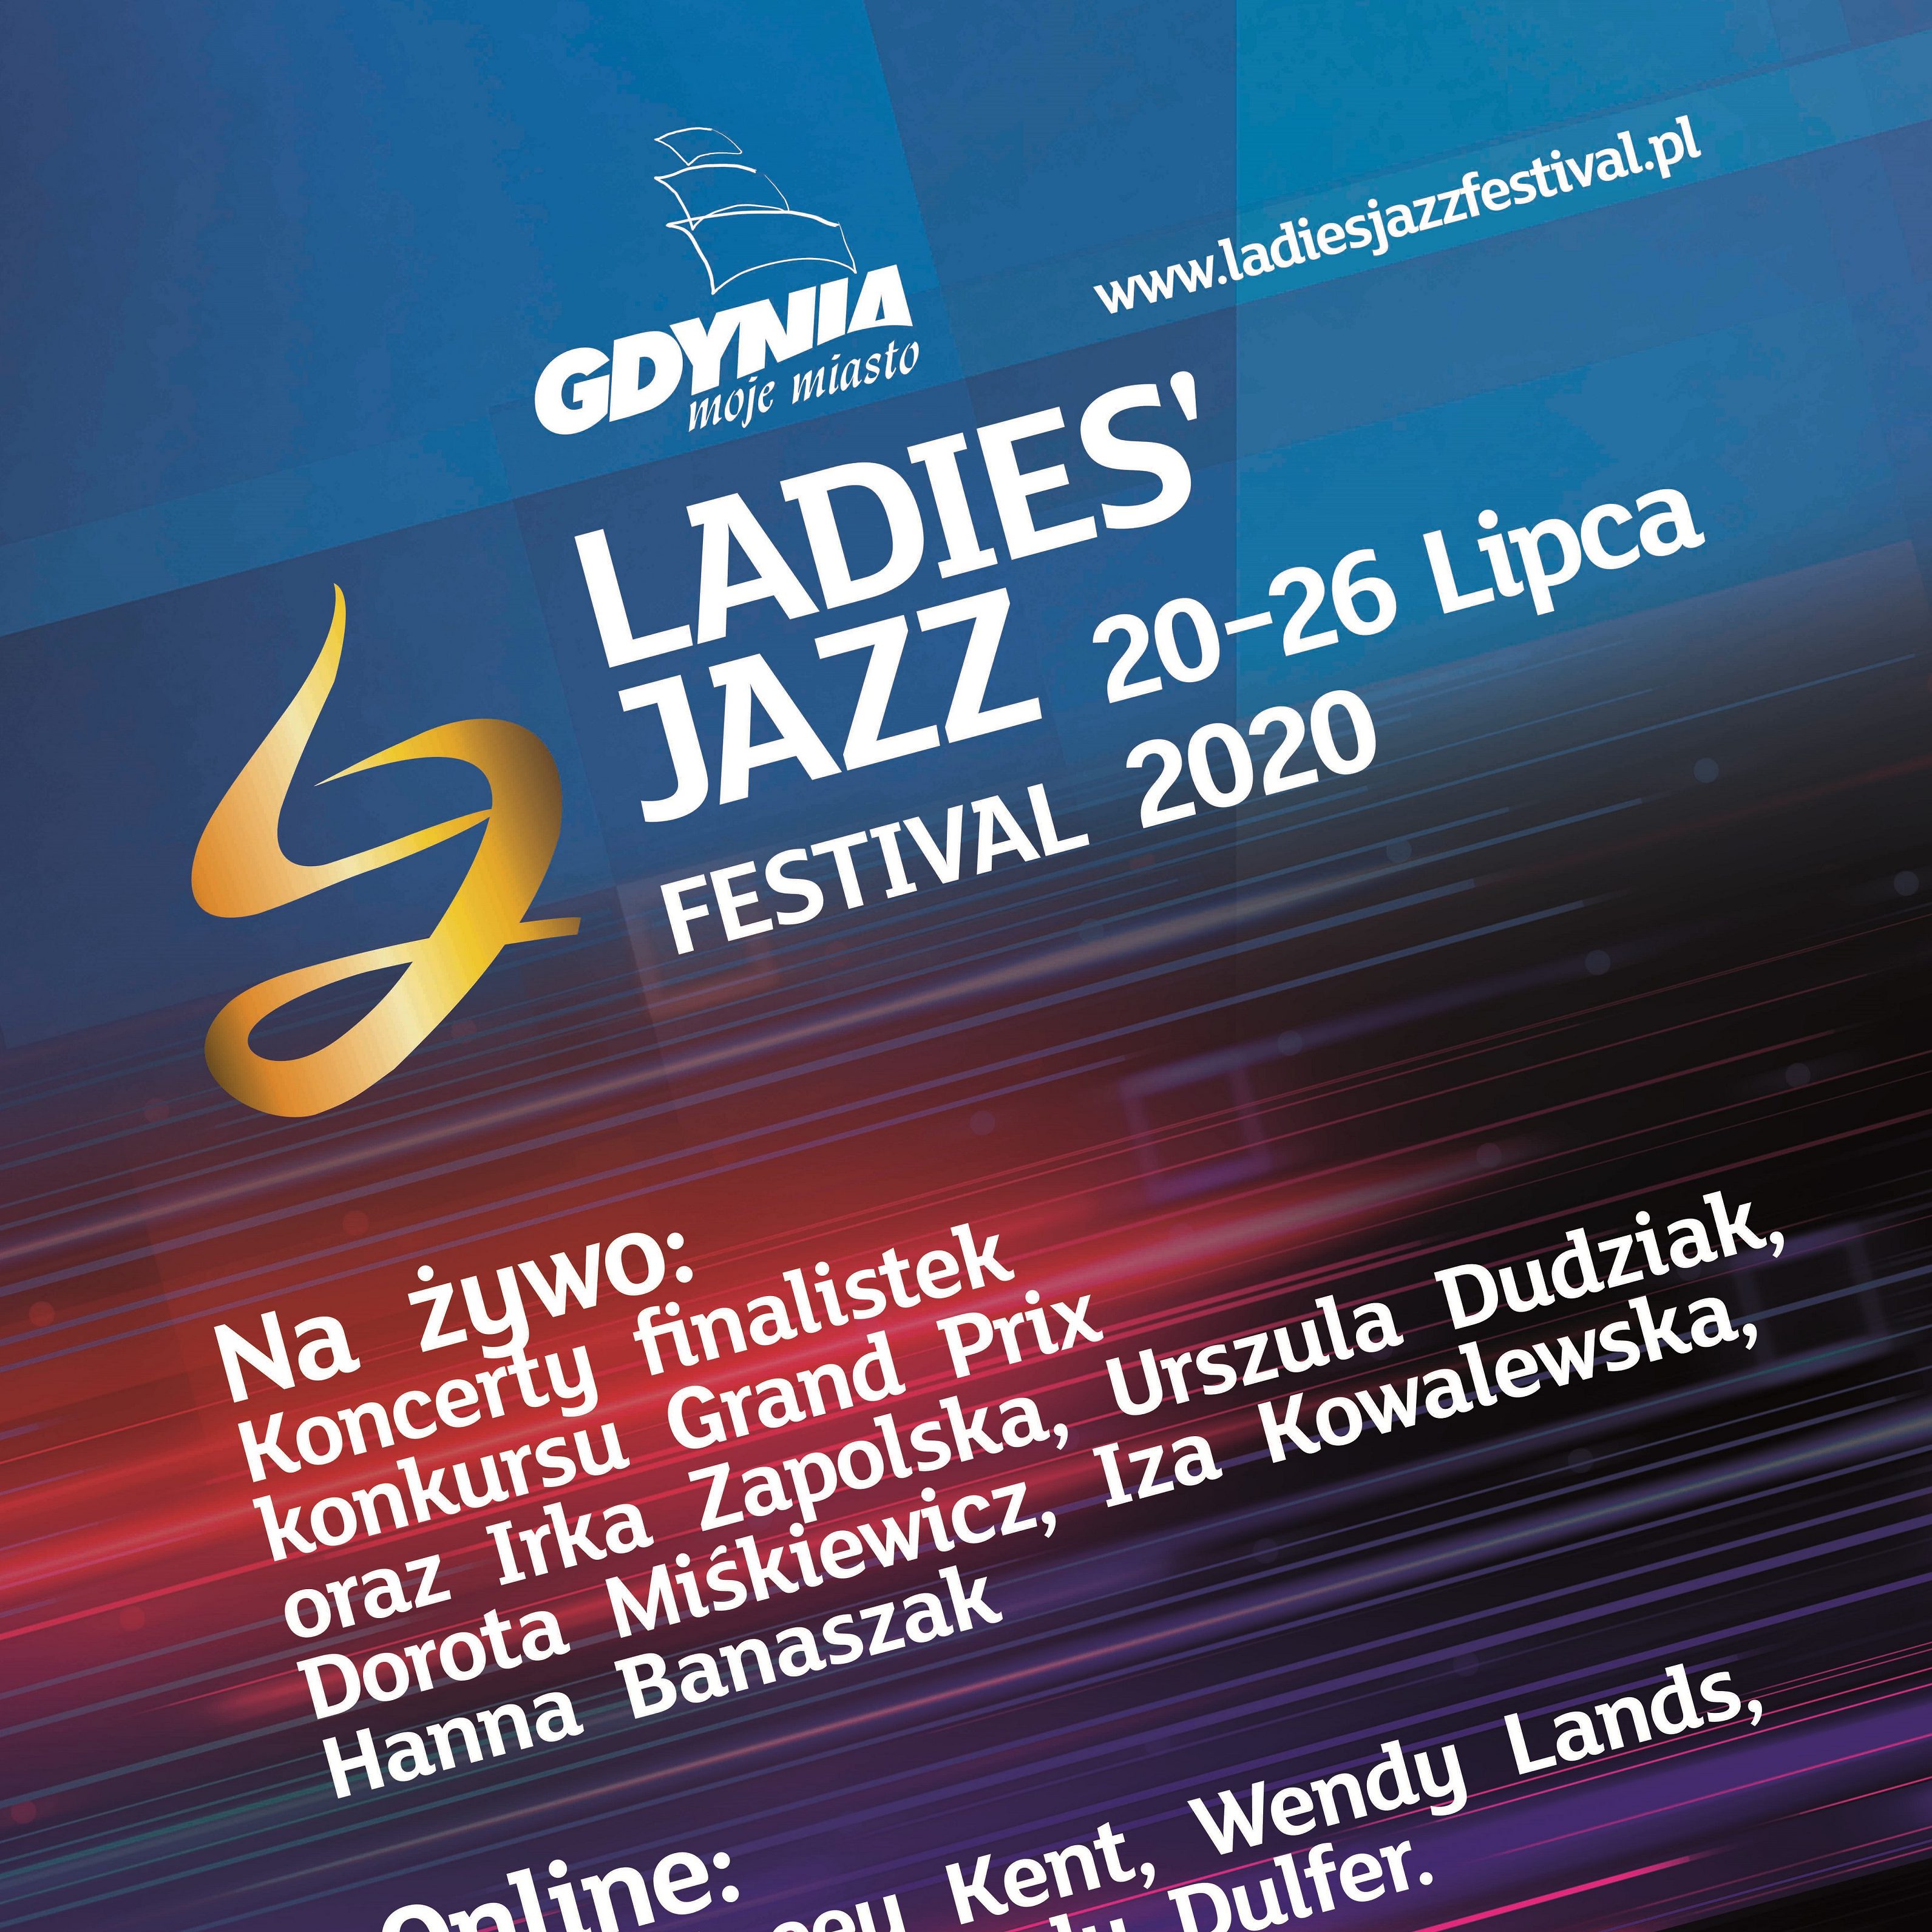 Ladies’ Jazz Festival – Irka Zapolska